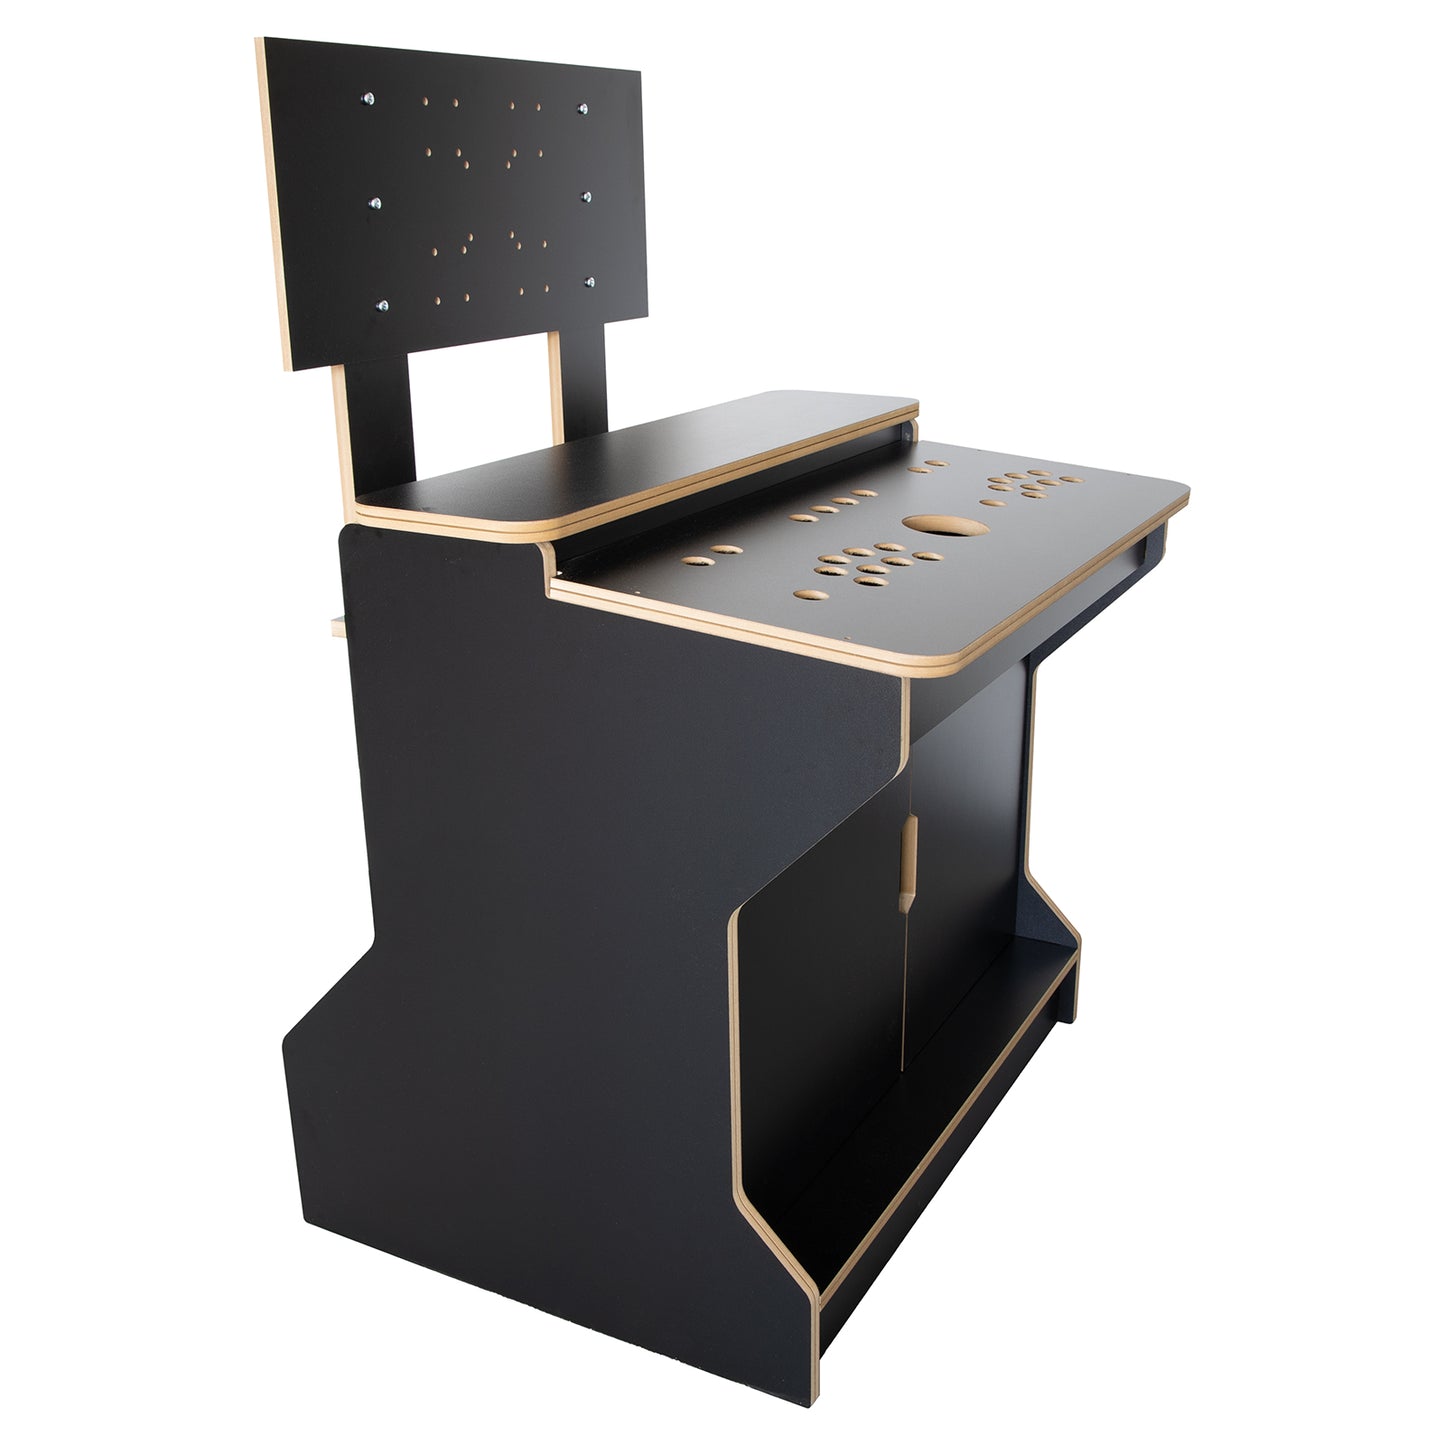 2 Player Sit Down Arcade Cabinet Flat Pack Kit - Black